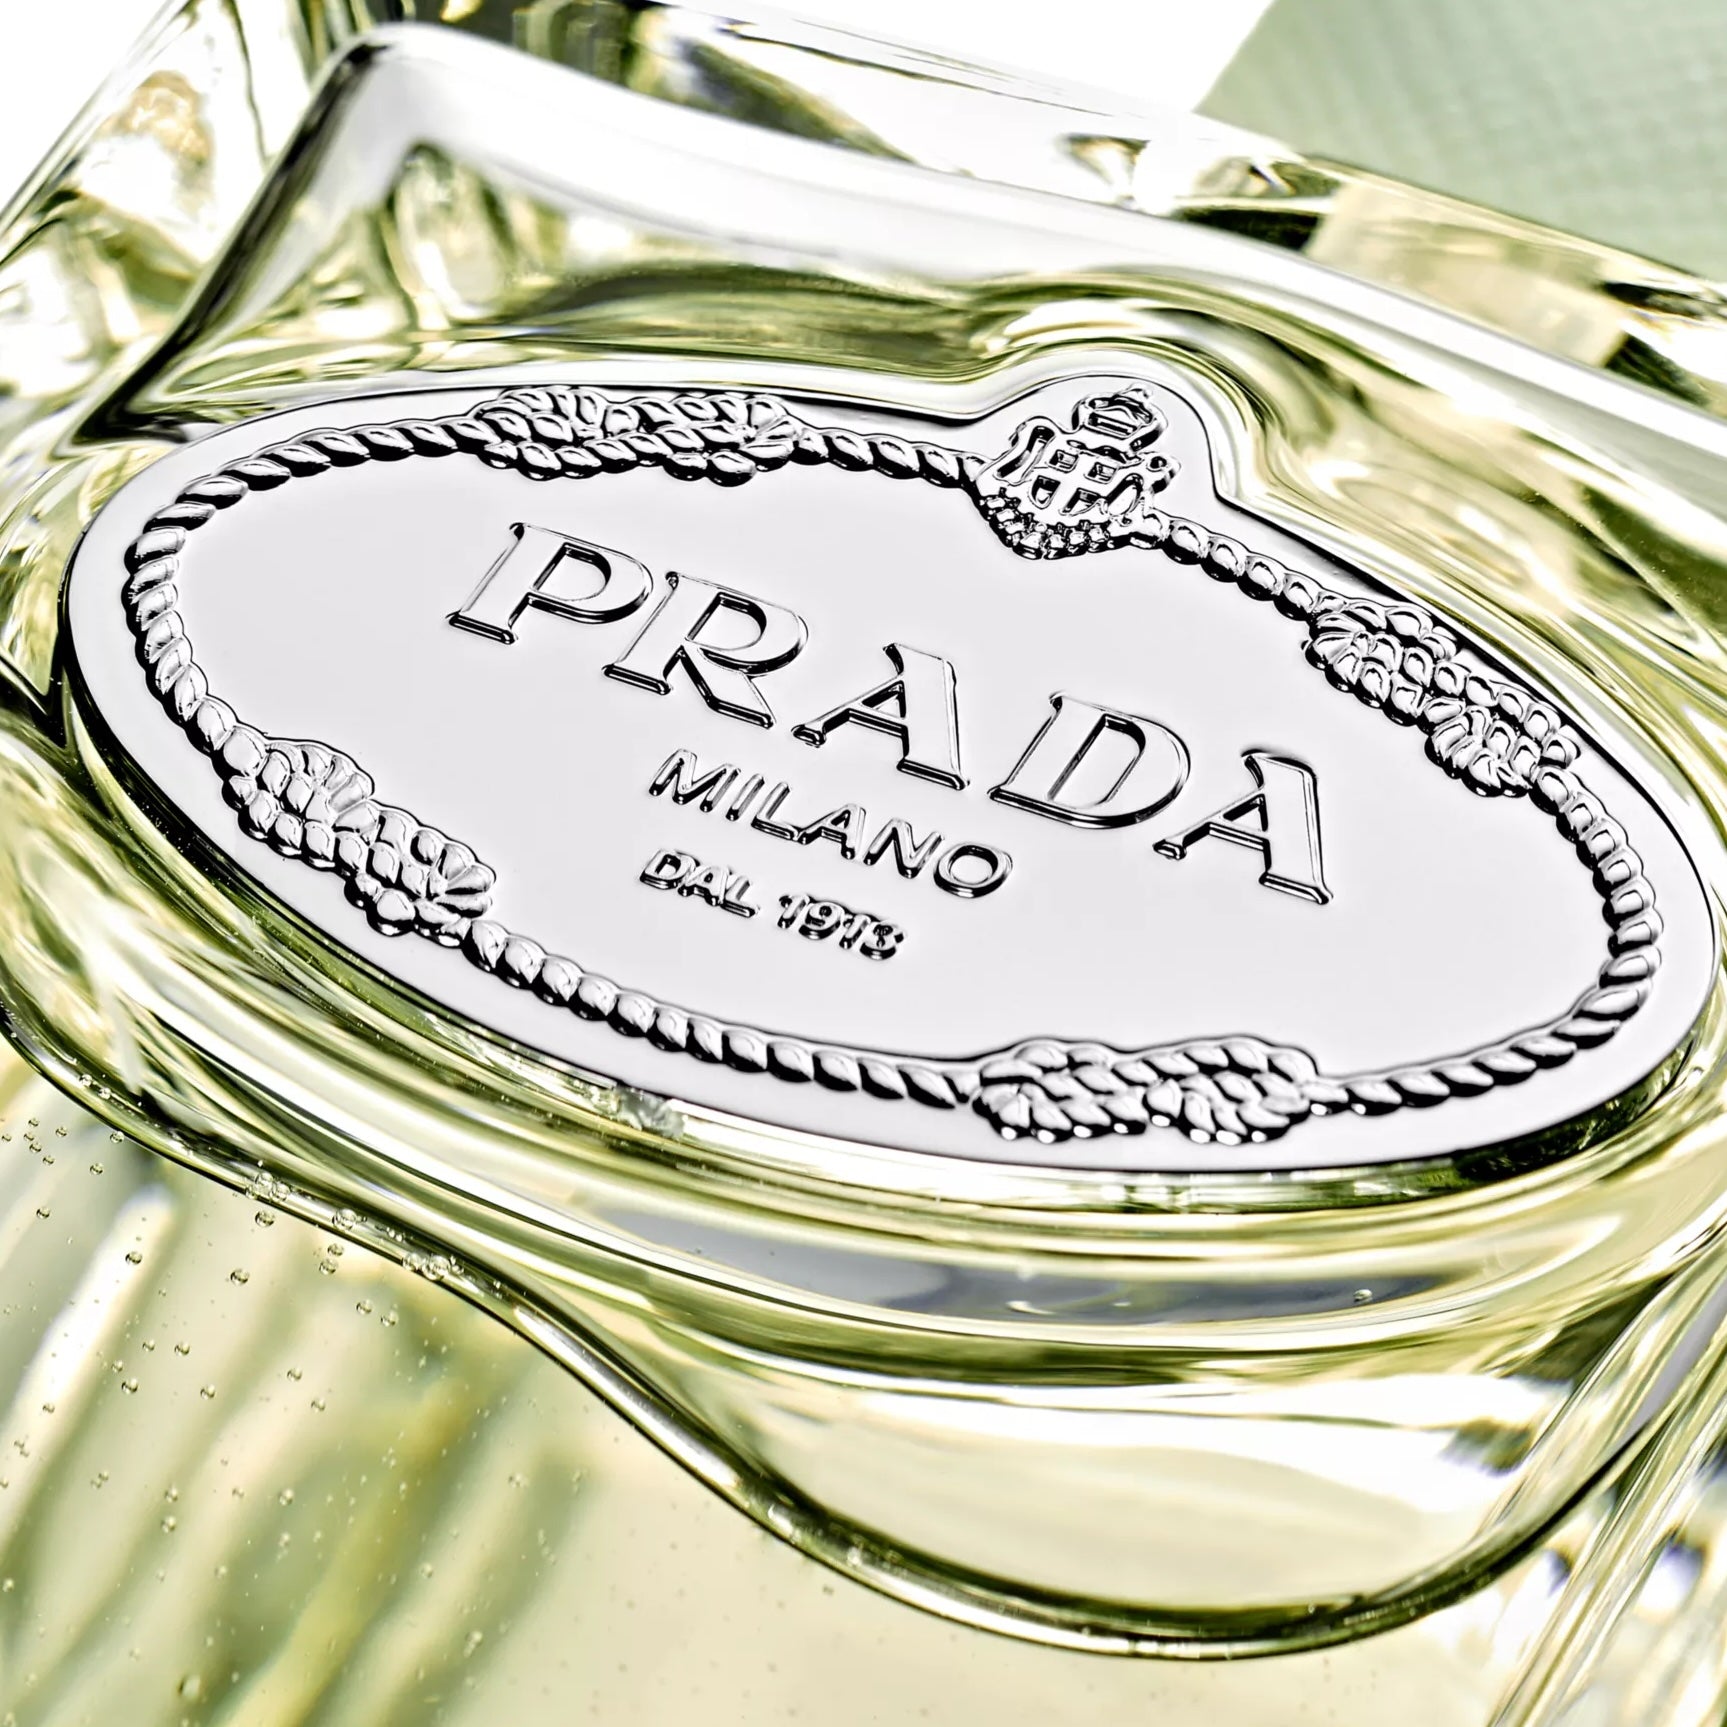 Prada Infusions De Vetiver 2015 EDP | My Perfume Shop Australia